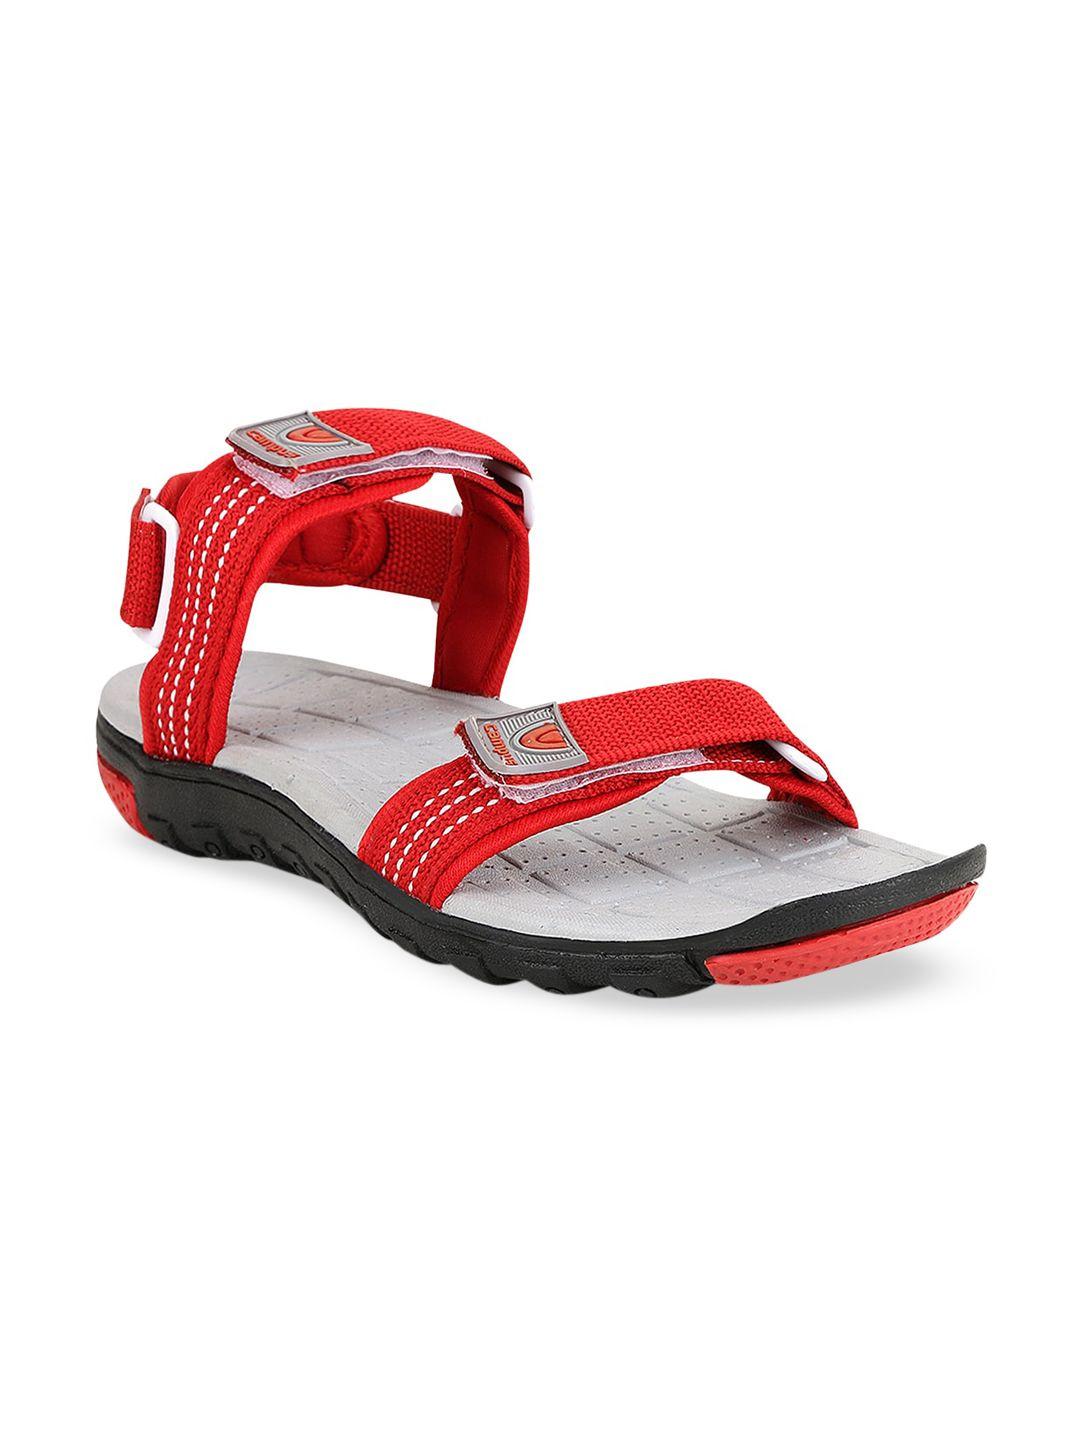 campus men red & grey colourblocked sports sandals